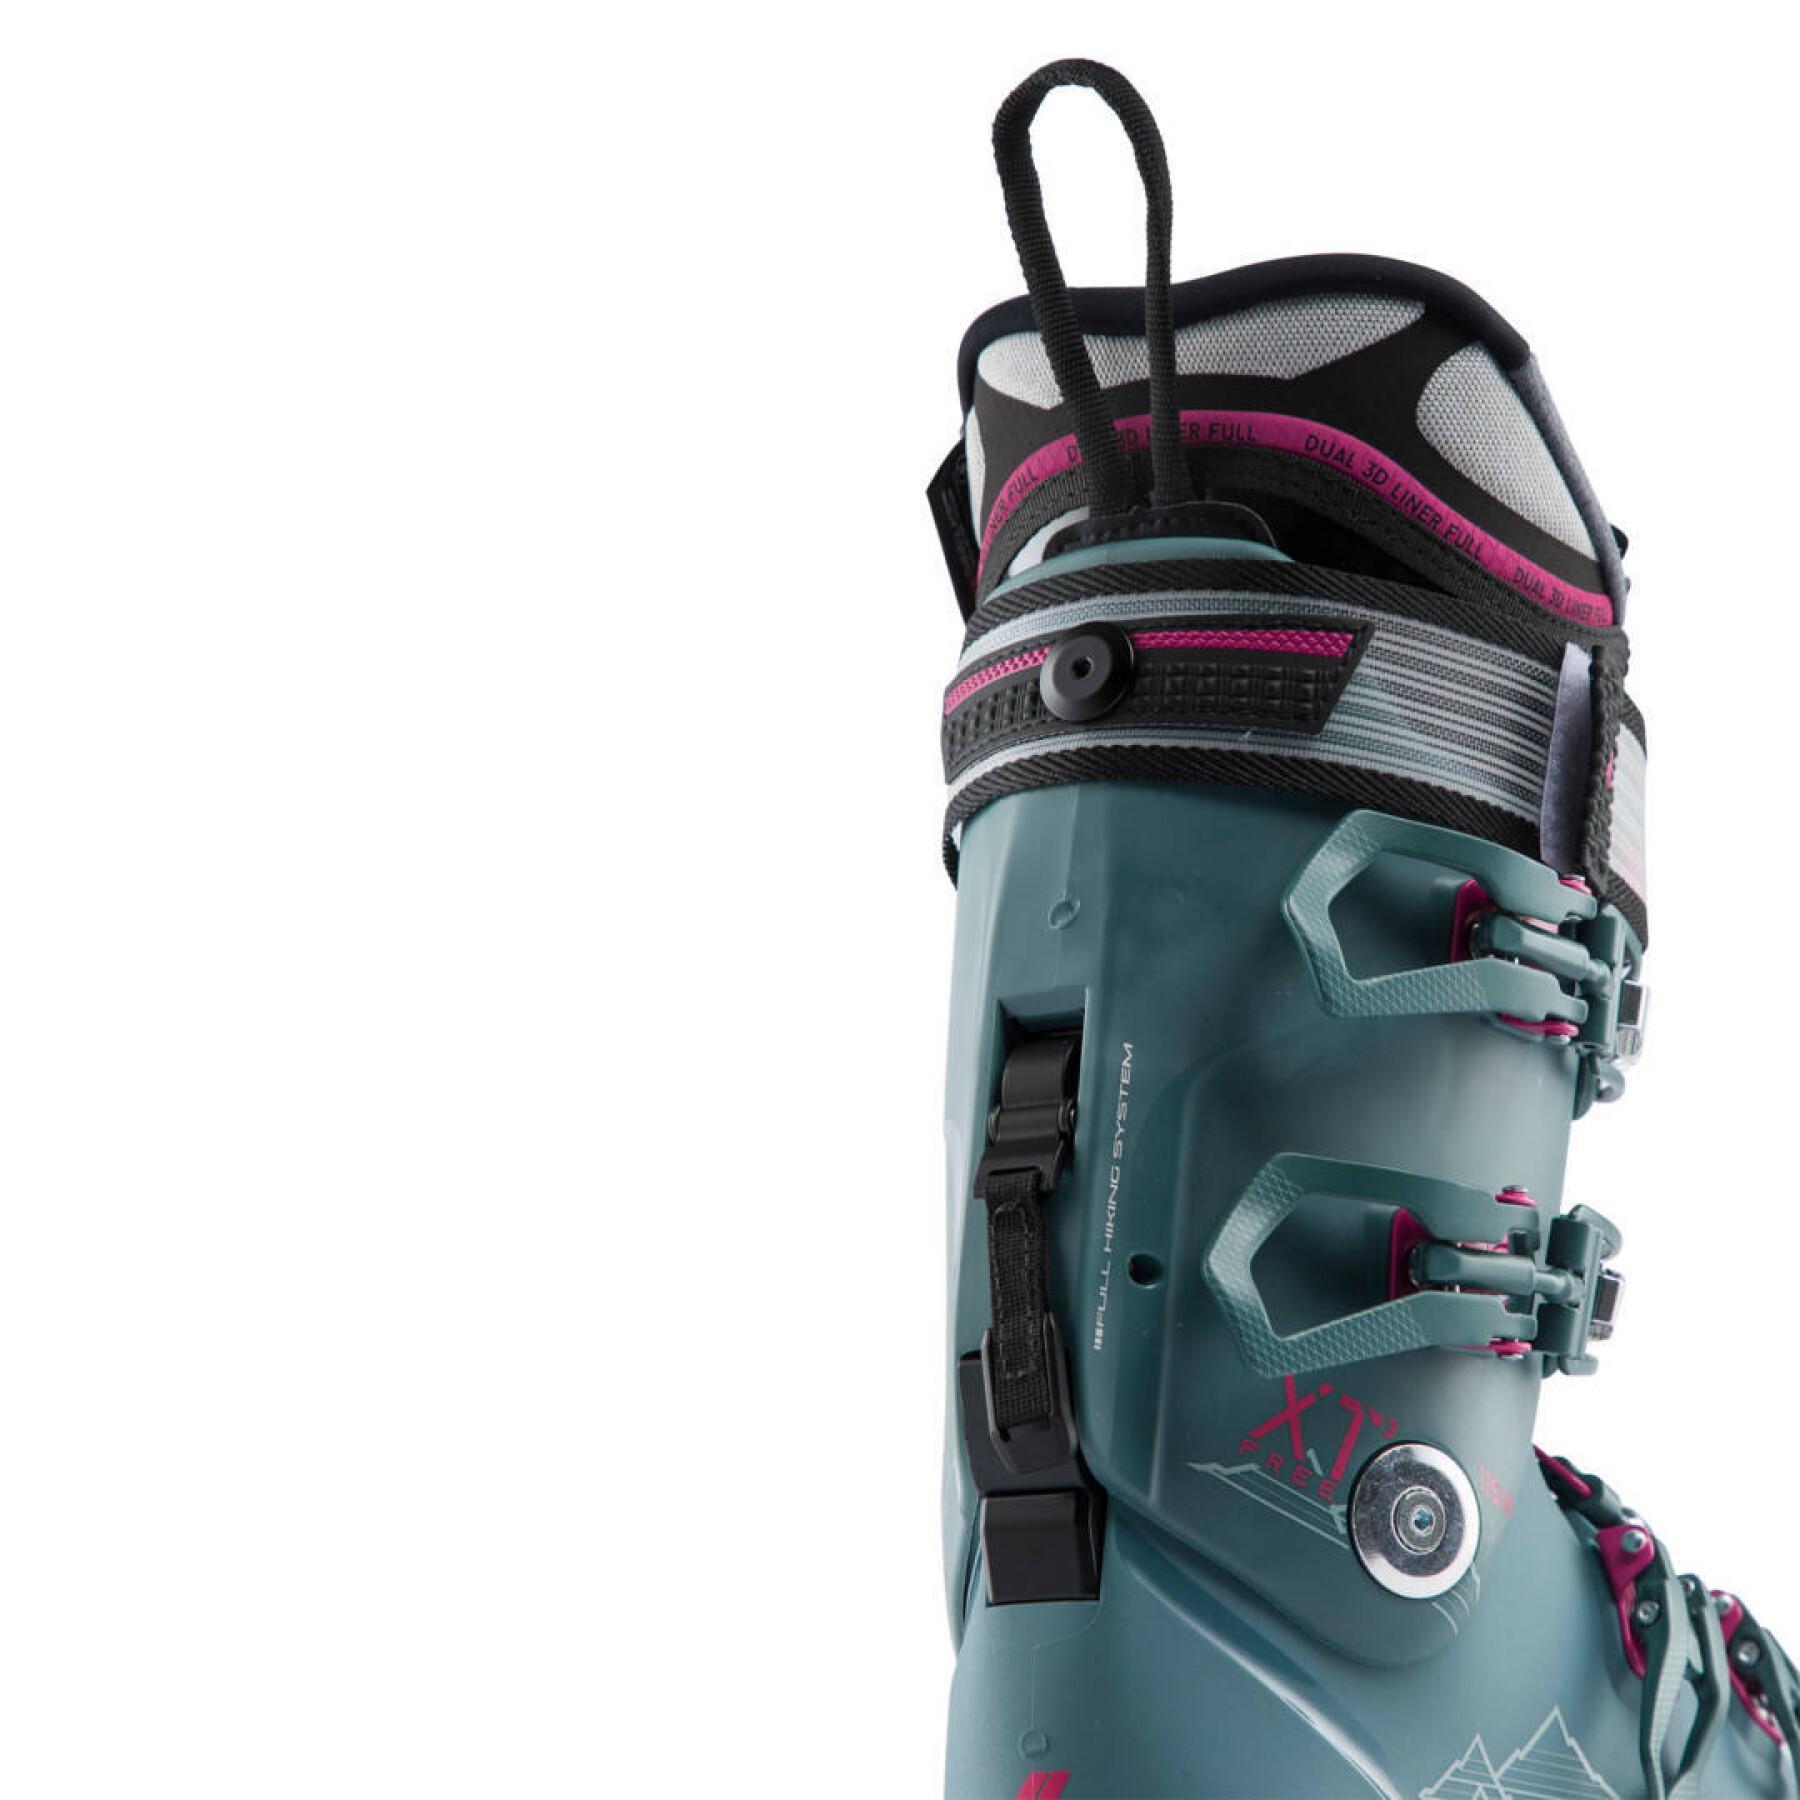 Chaussures de ski Lange XT3 FREE 115MV GW-ABYS